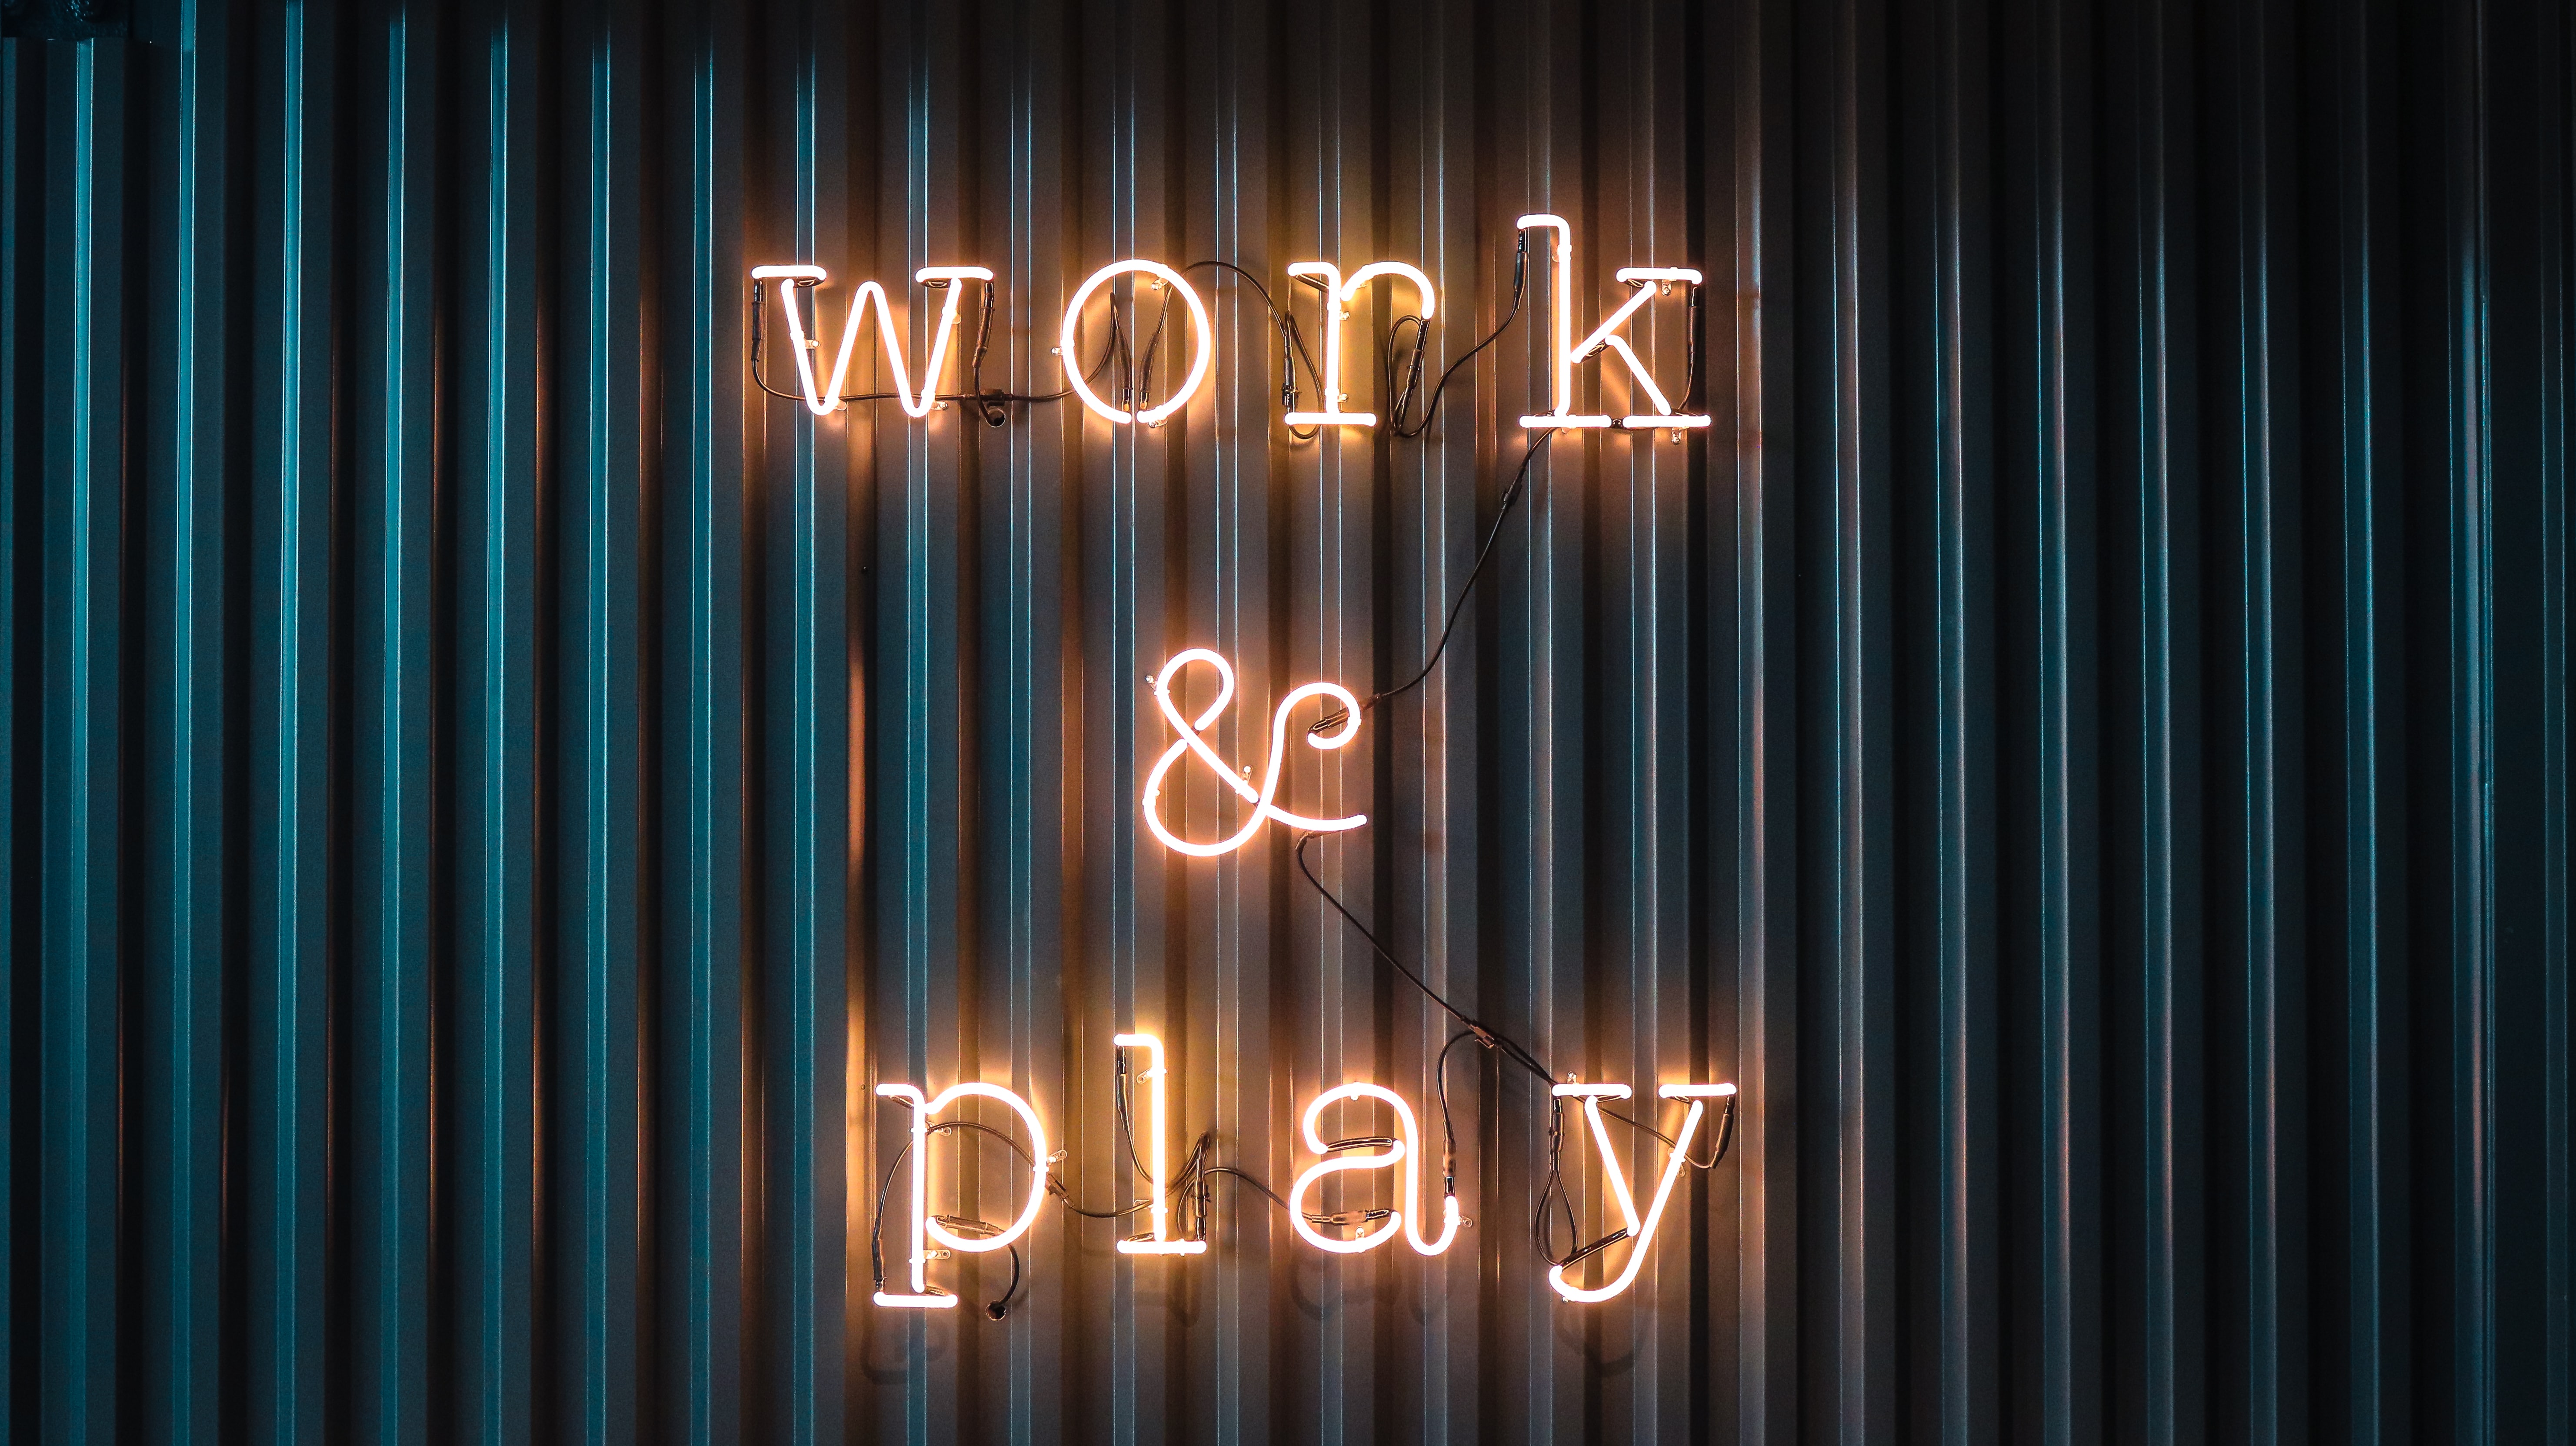 Work & Play by Antonio Gabola